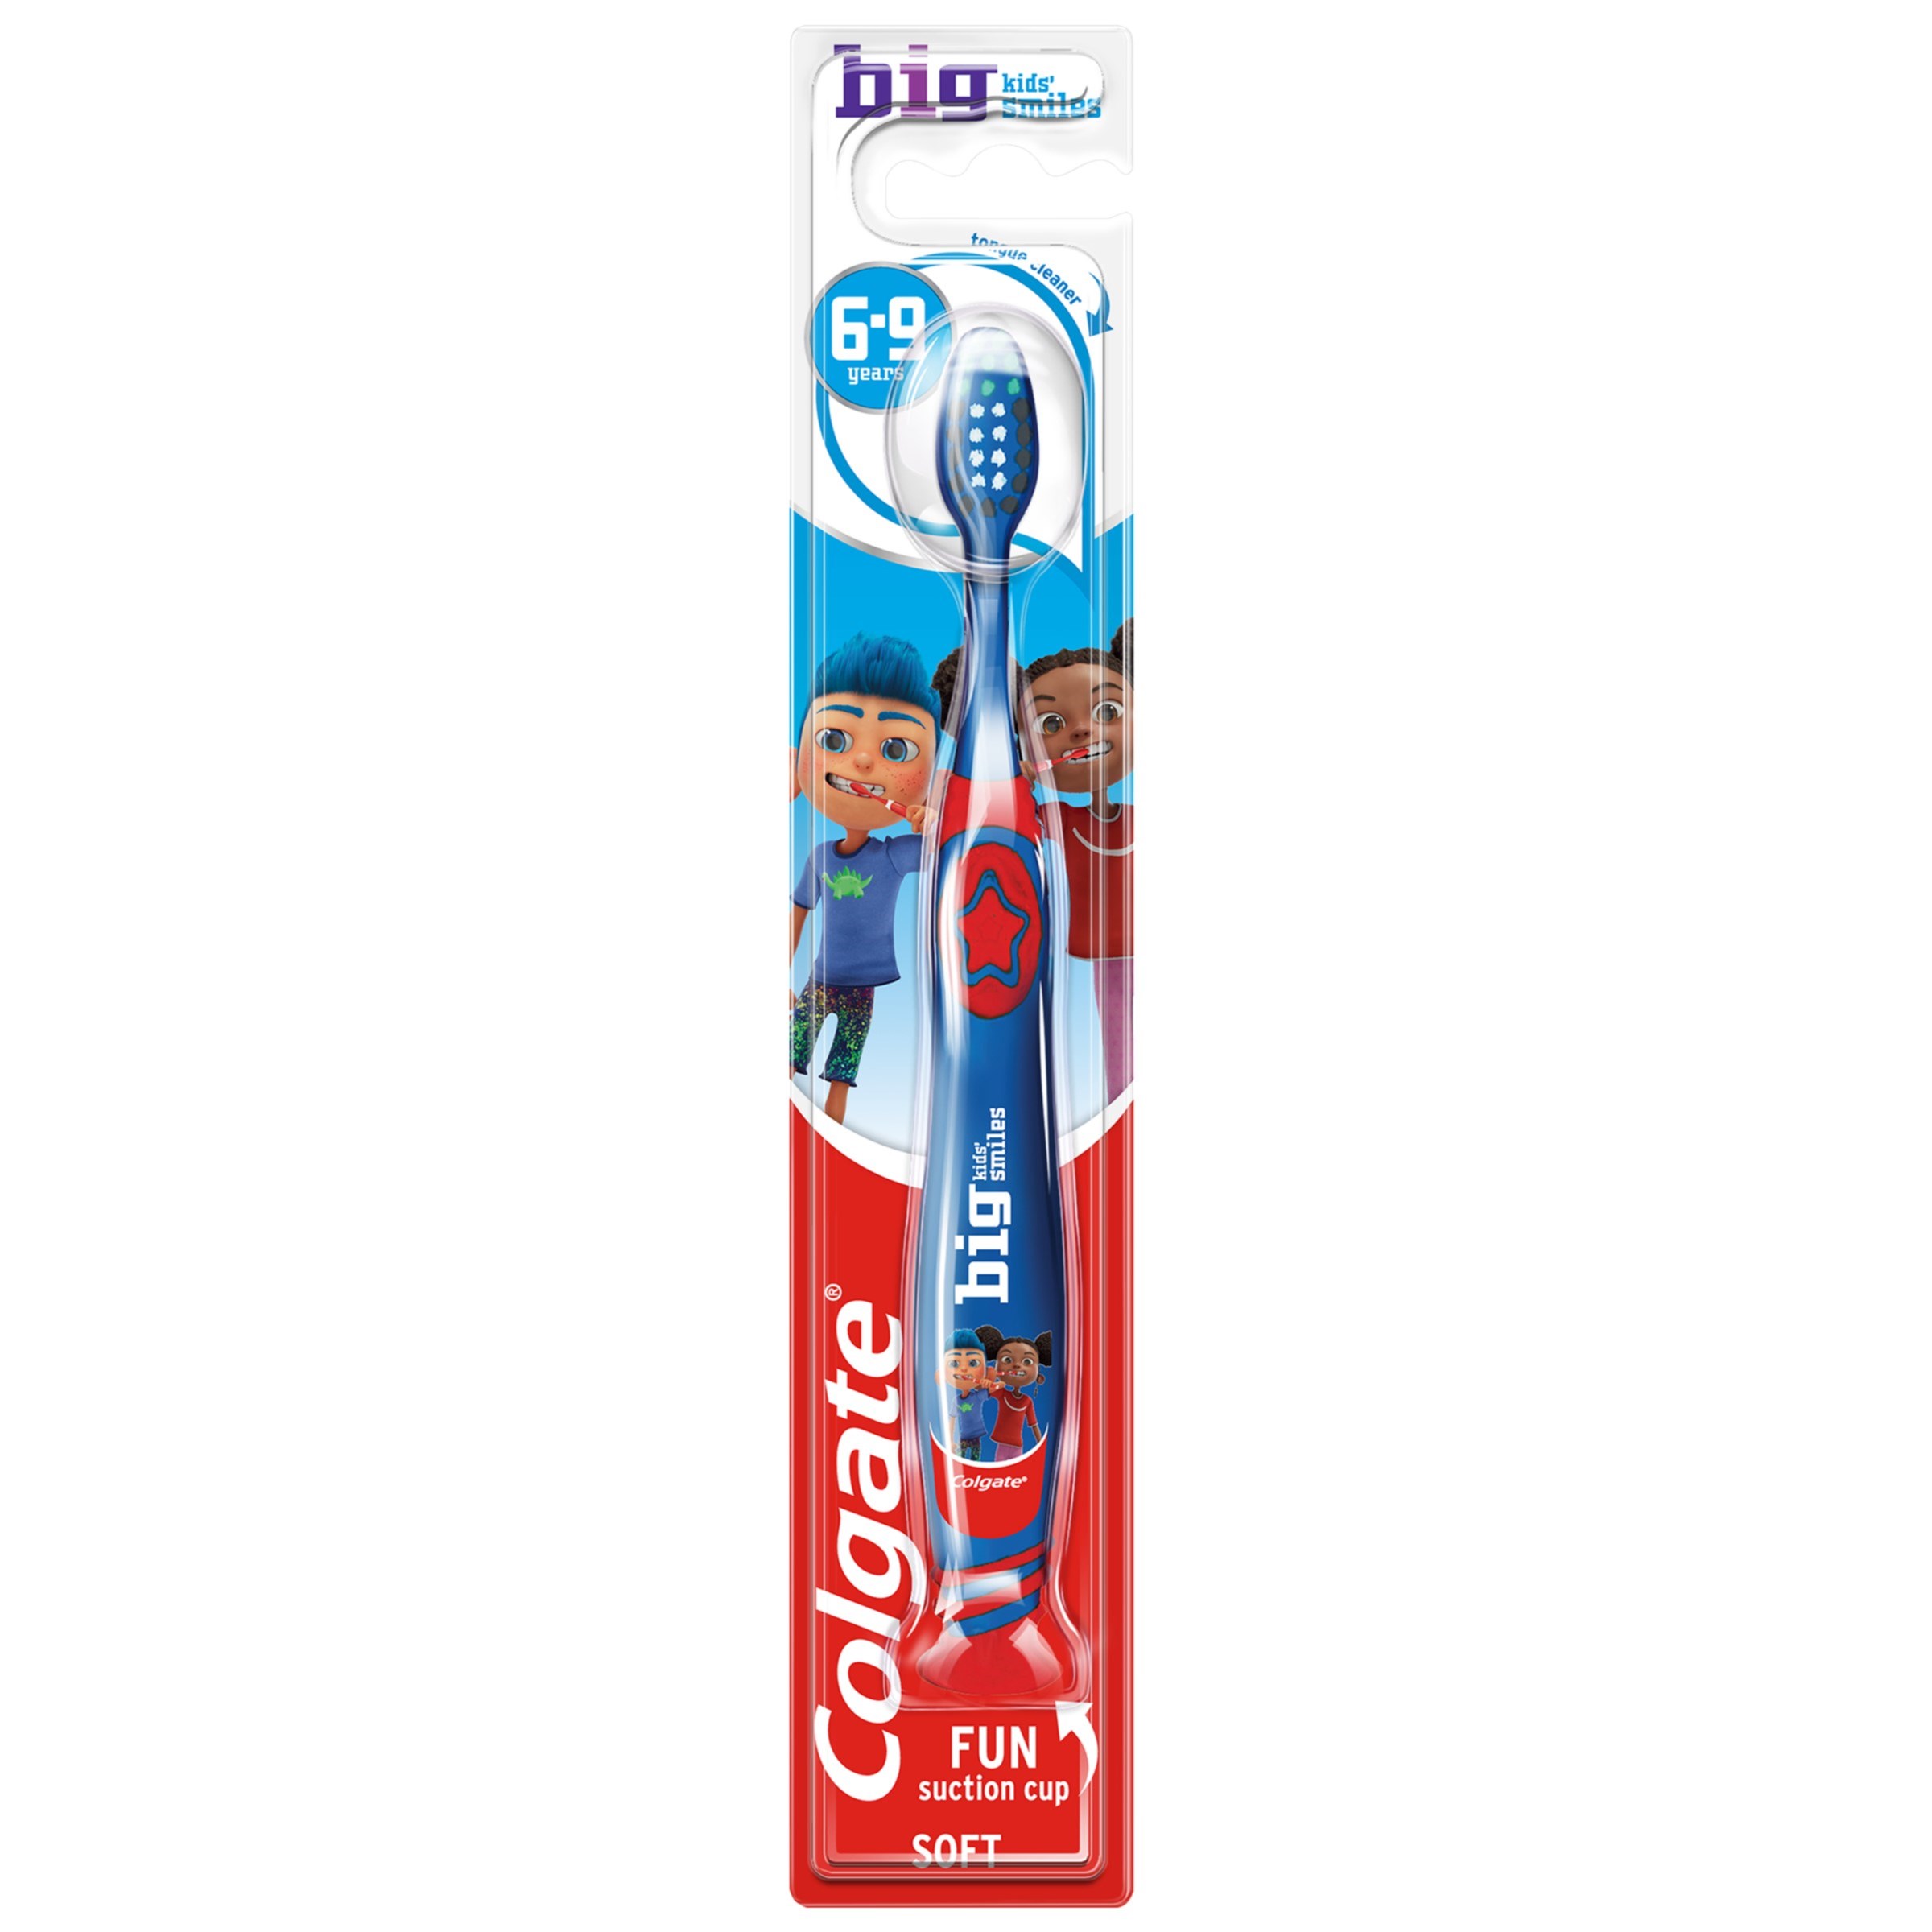 Colgate Toothbrush Big Kids Smiles 6+ years